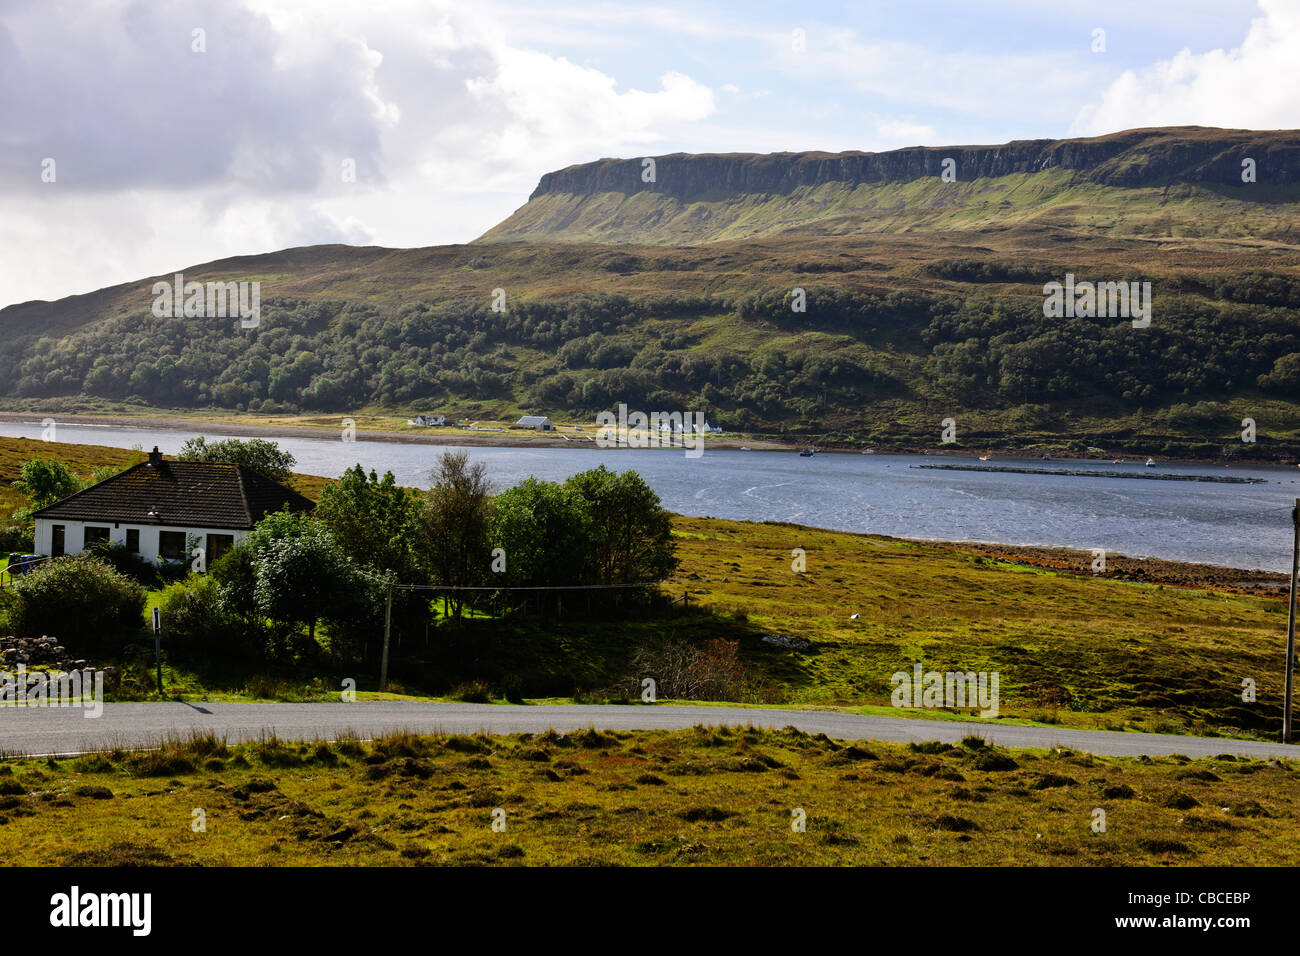 Glas Bhein Mhorn,Beinn Deorg Mhor,Blaven,Torrin Village,The Cuillin Hills,Black Cuillins,Loch Slapin,B8083,Isle of Sky,Scotland Stock Photo